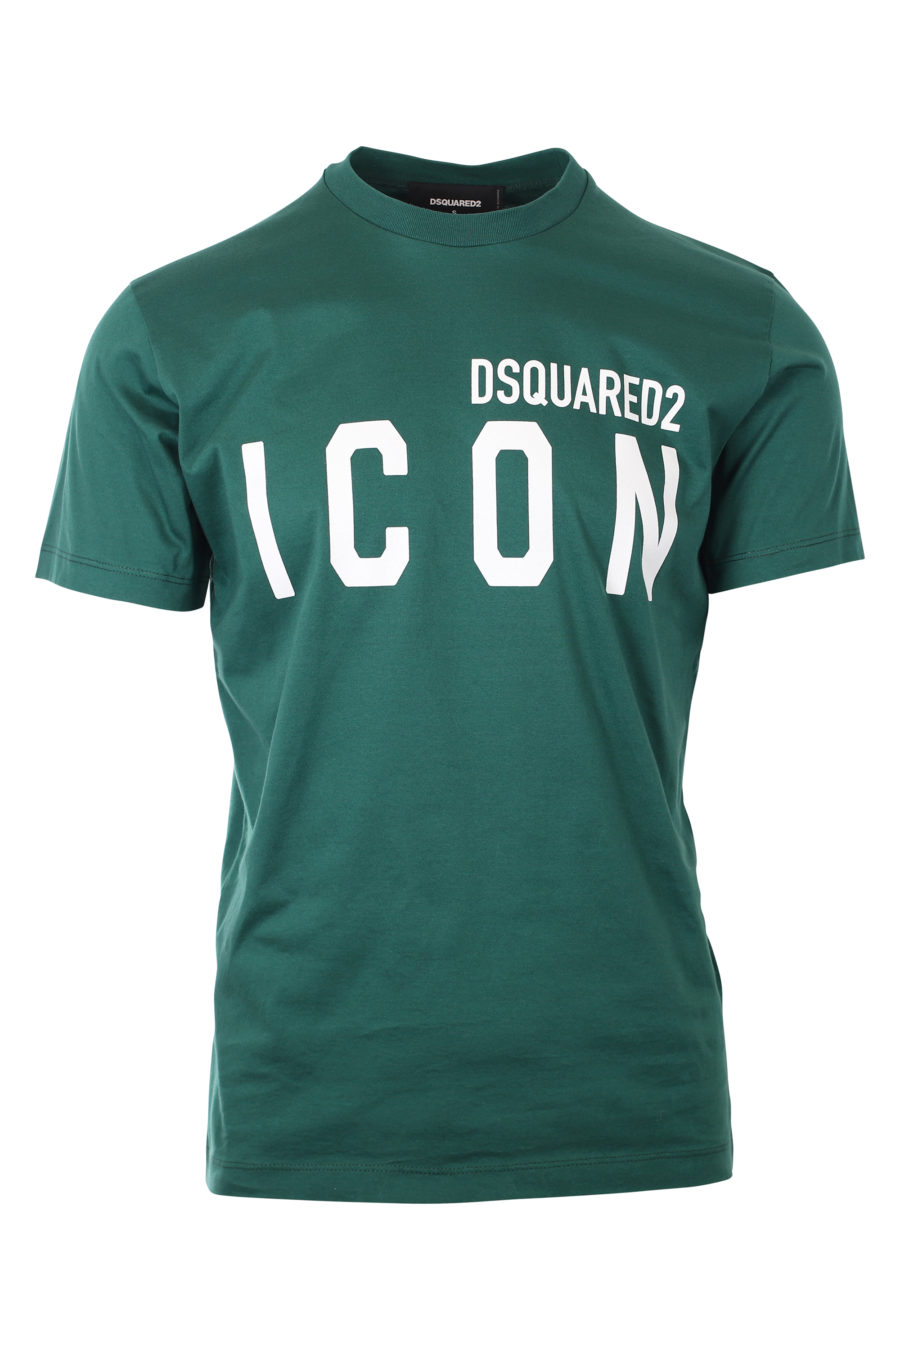 T-shirt verde com o logótipo "icon" - IMG 9741